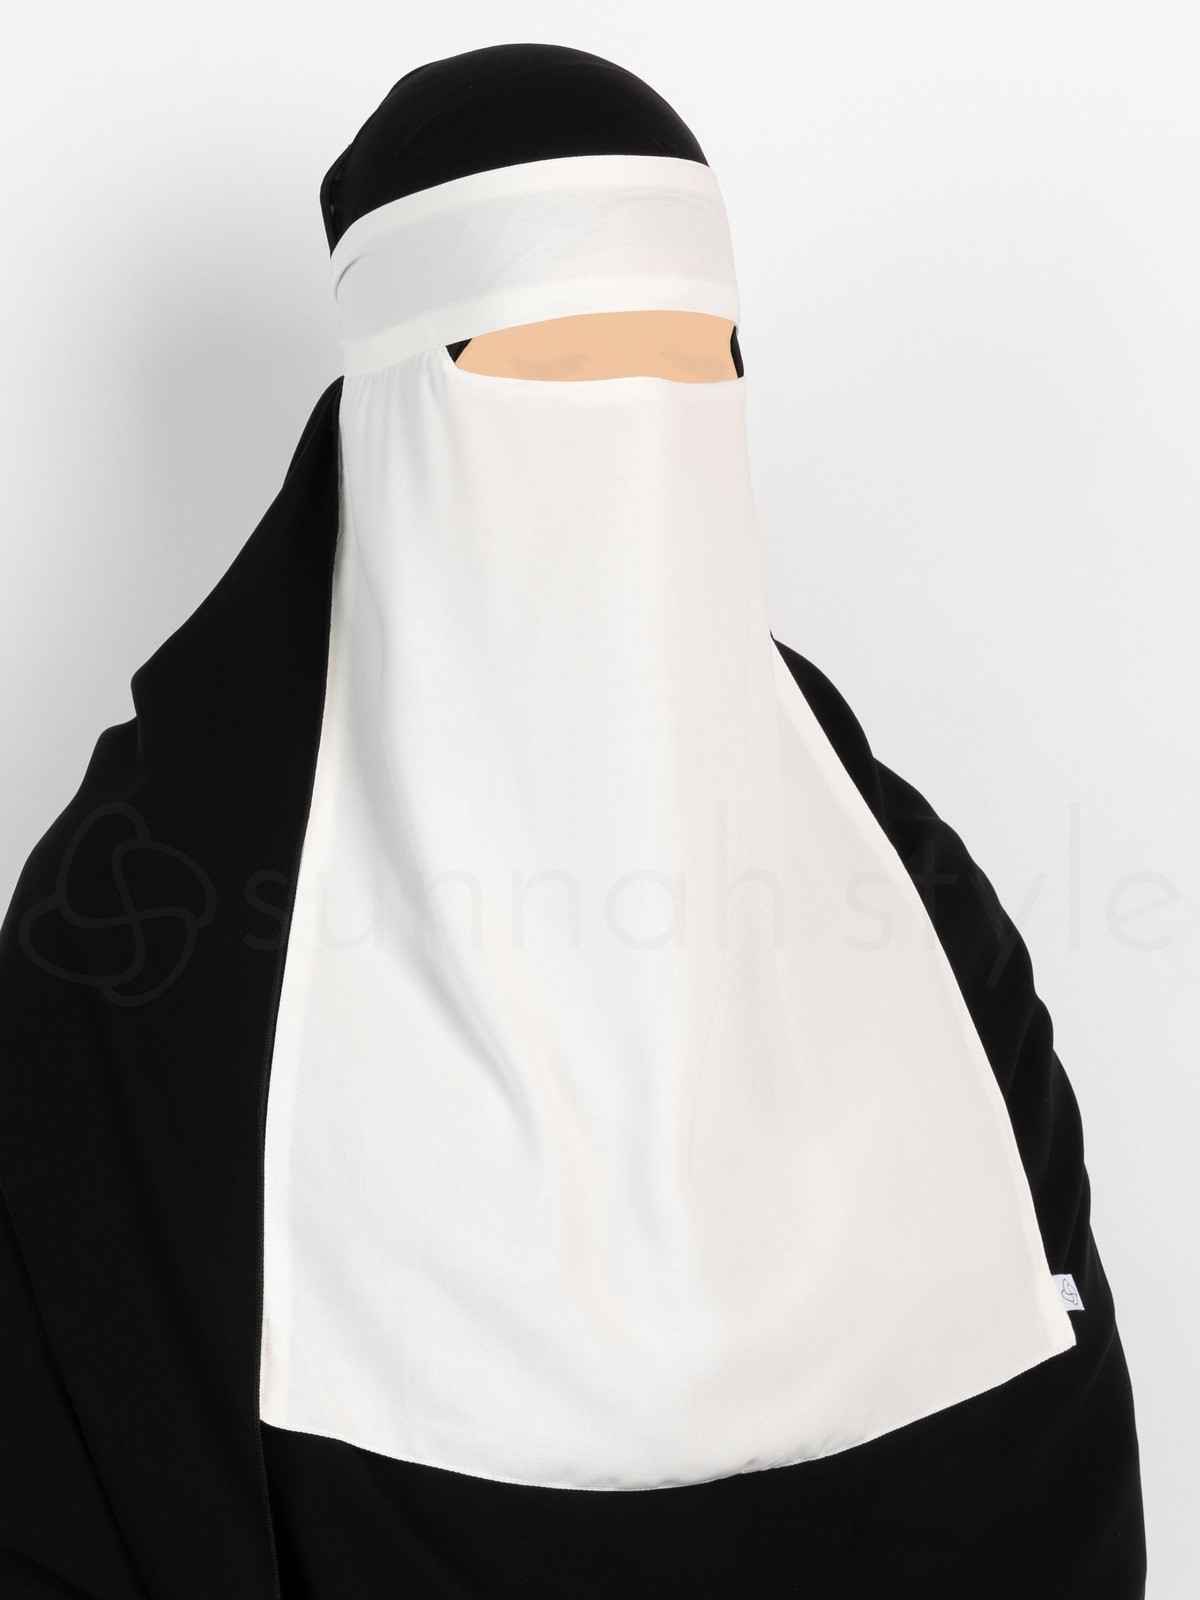 Sunnah Style - Narrow No-Pinch One Layer Niqab (White)